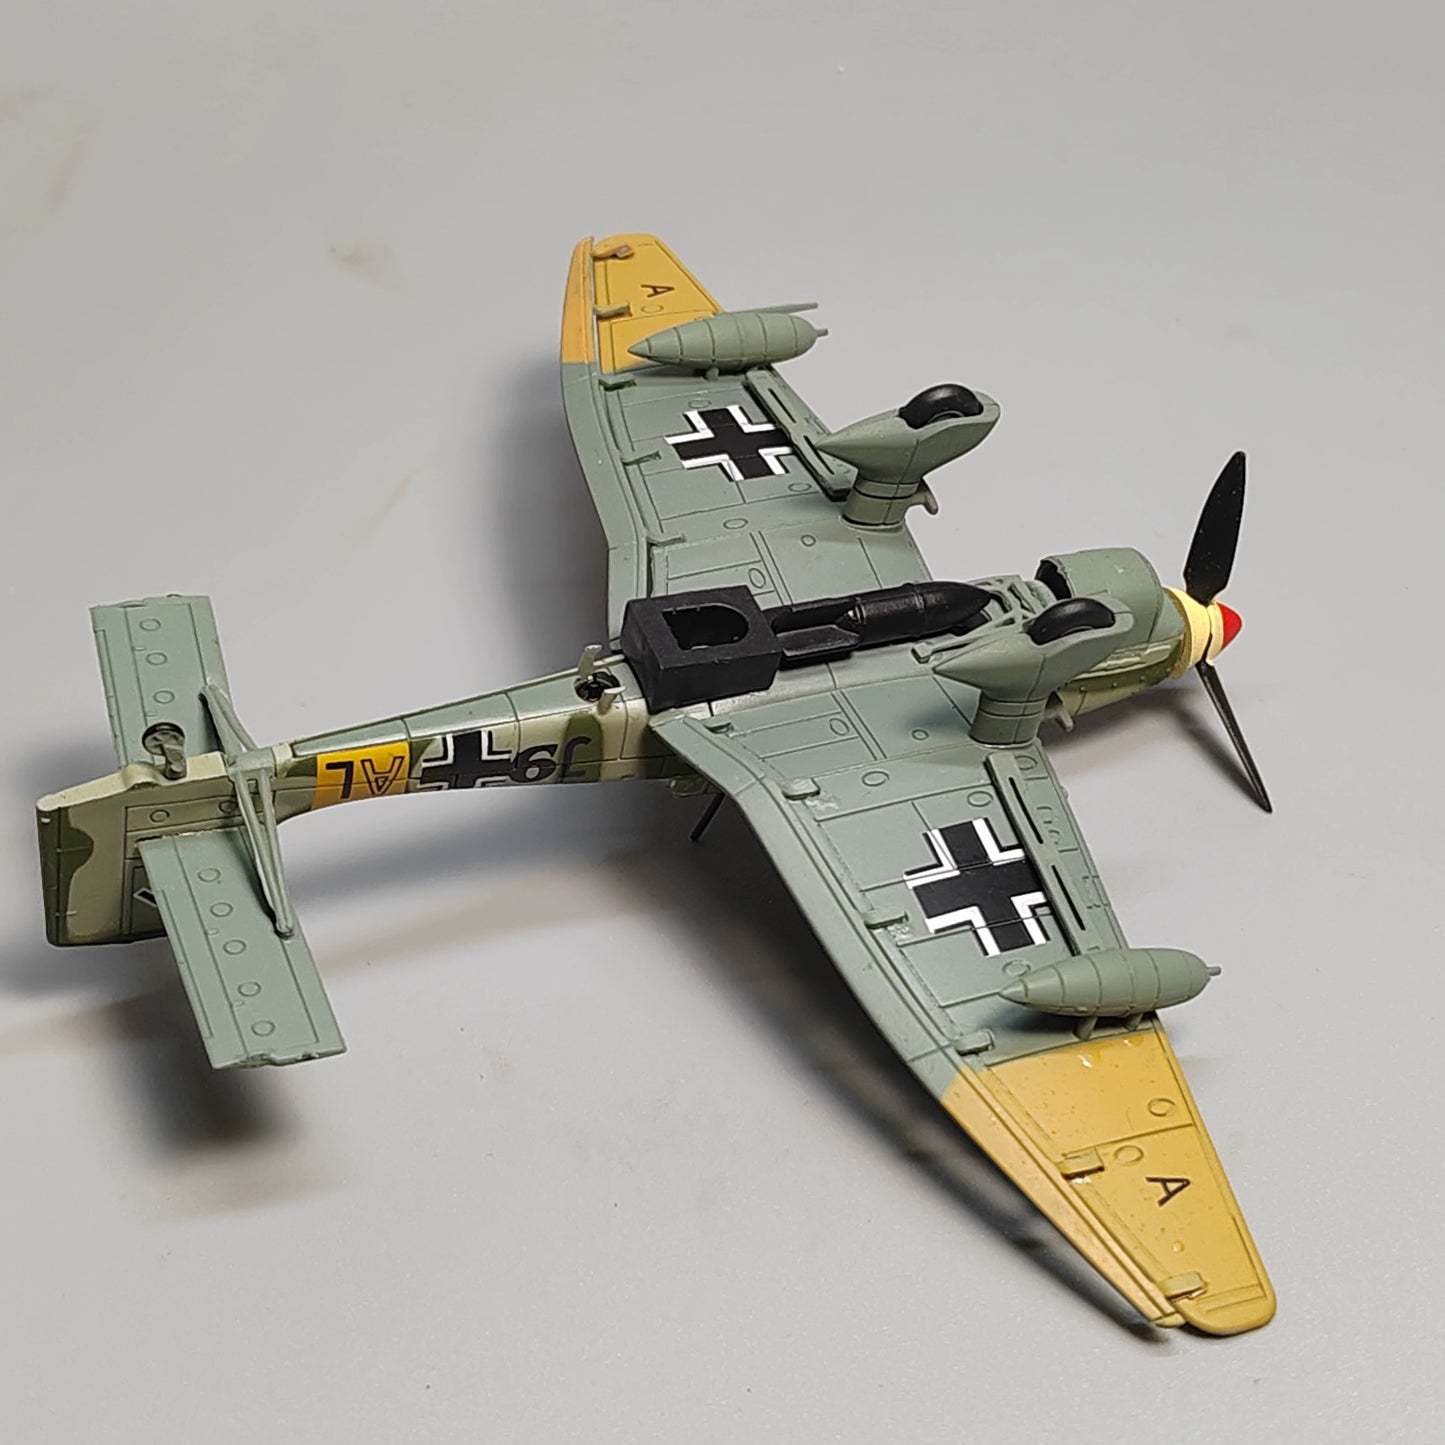 1/100 Scale Junkers Ju 87 Stuka WWII German Dive Bomber Diecast Model Aircraft